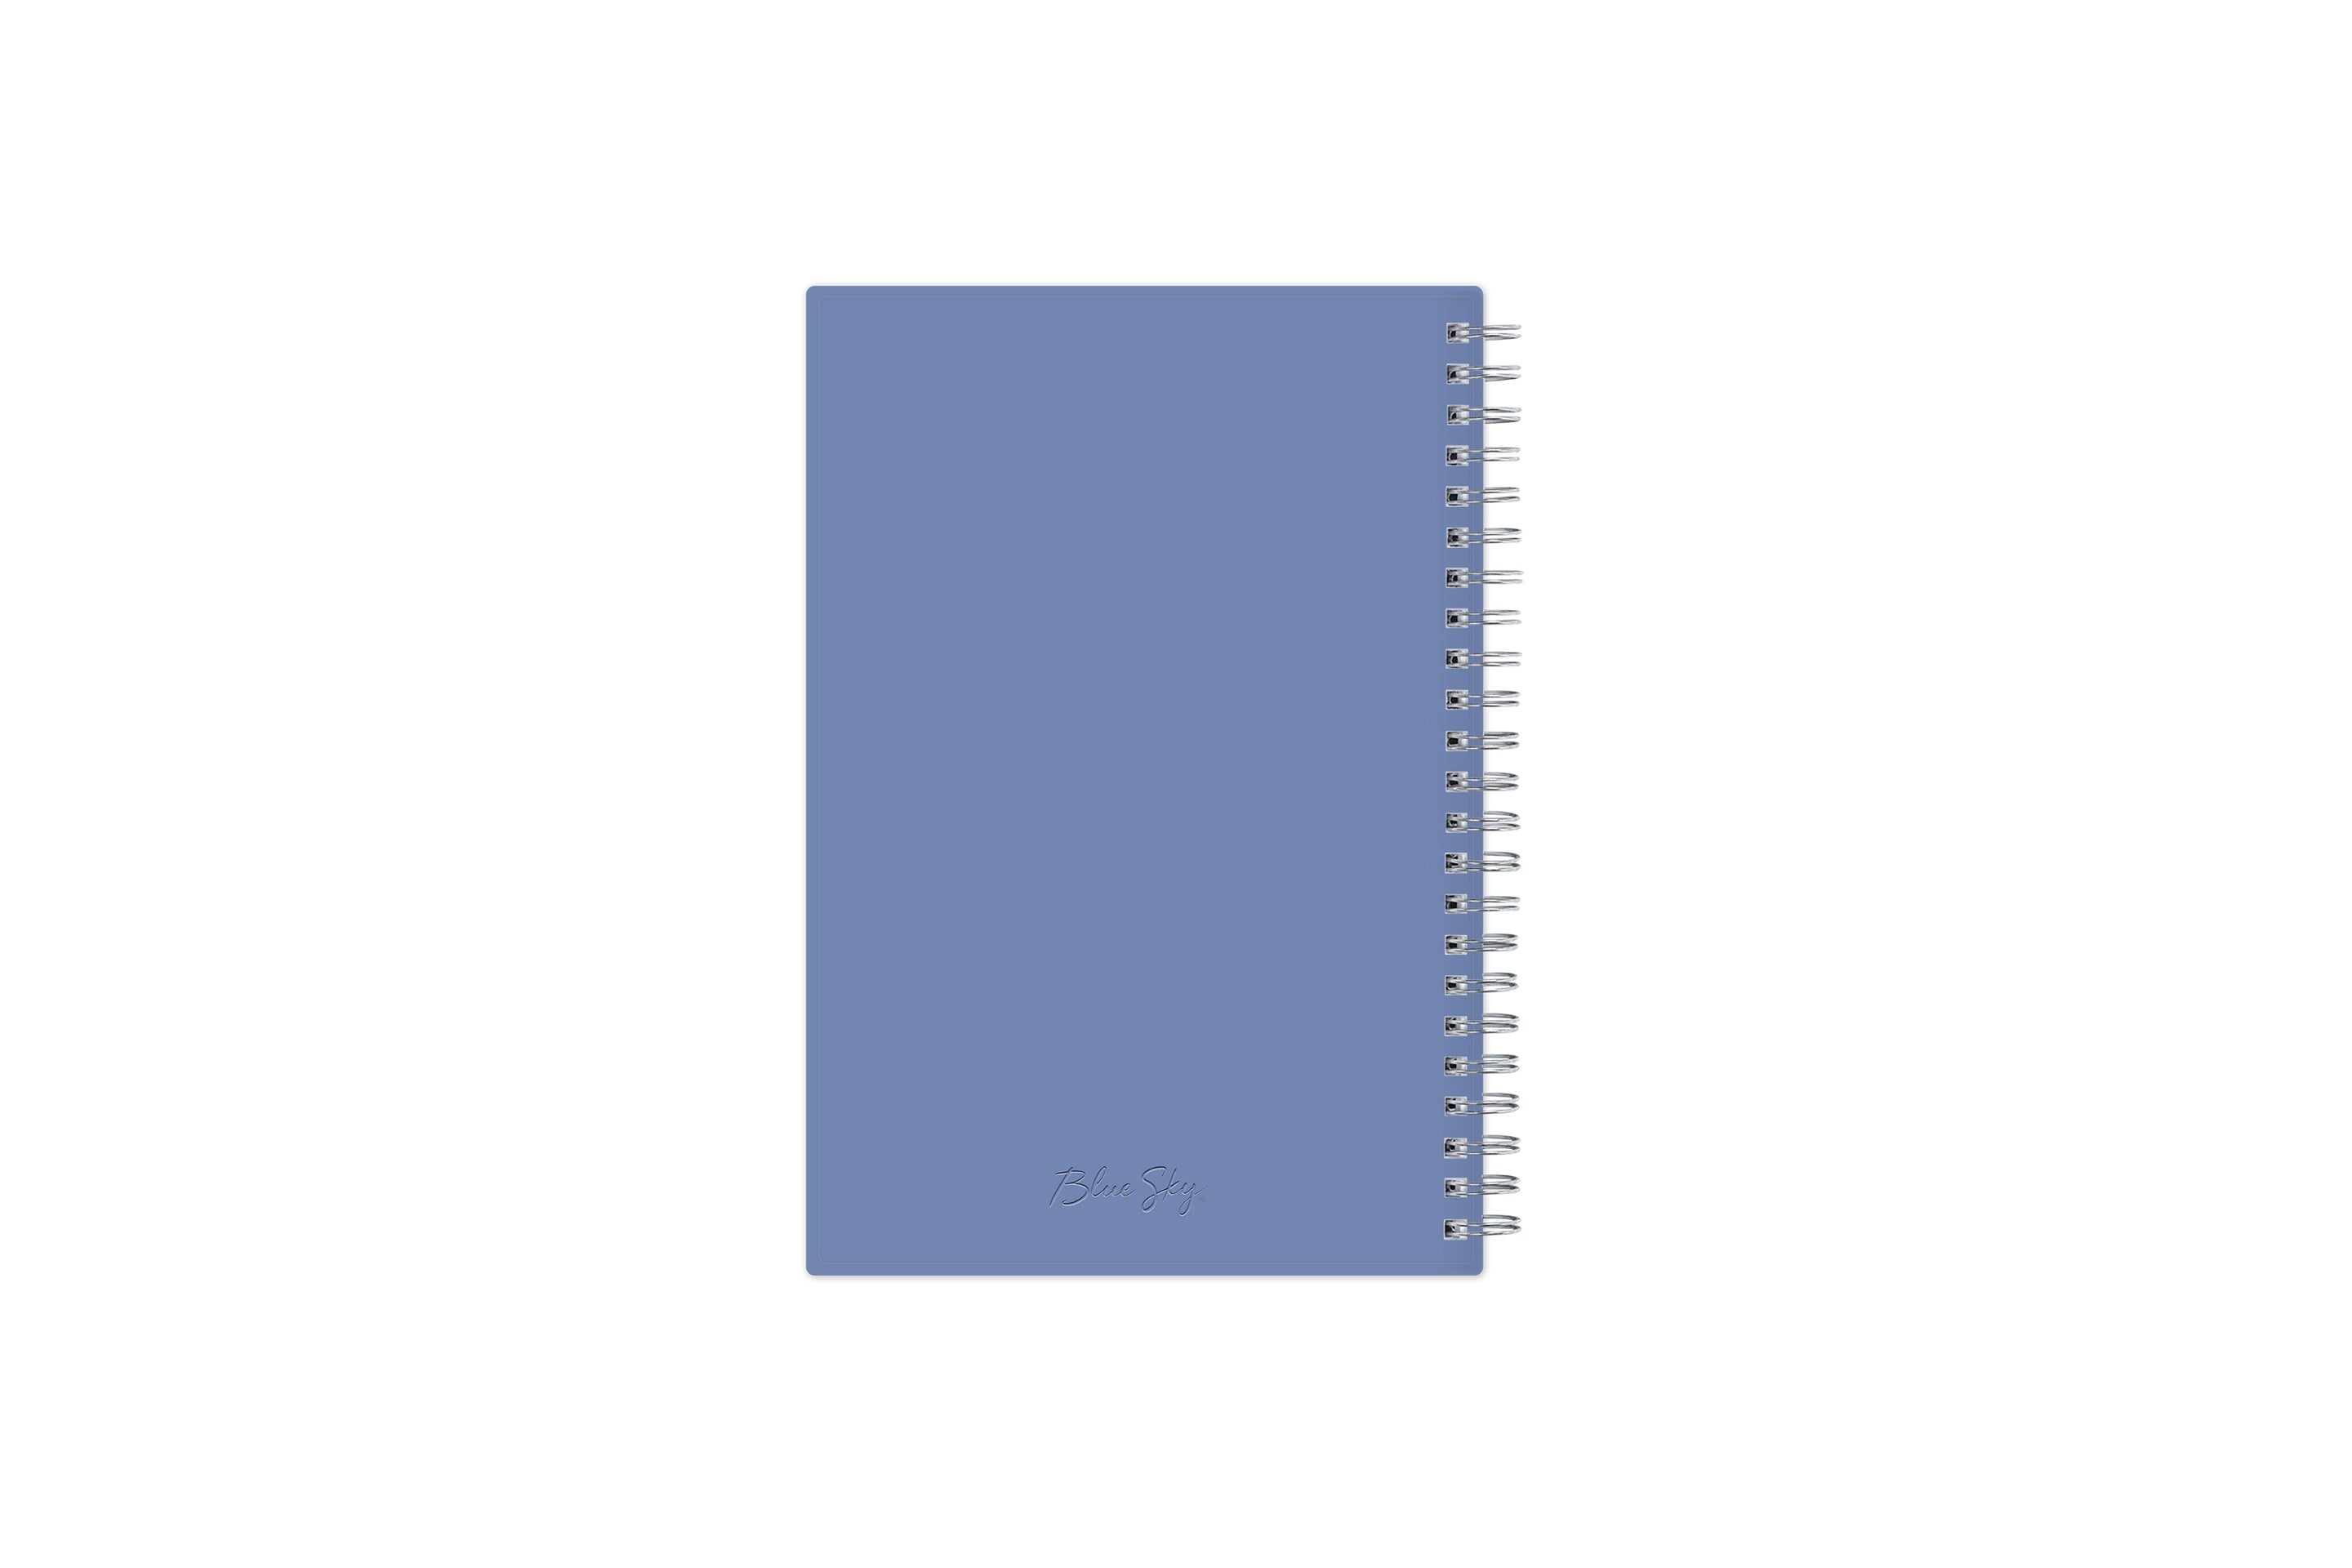 2024 Weekly Monthly Planner, 5x8, by Blue Sky, Navy Crossgrain